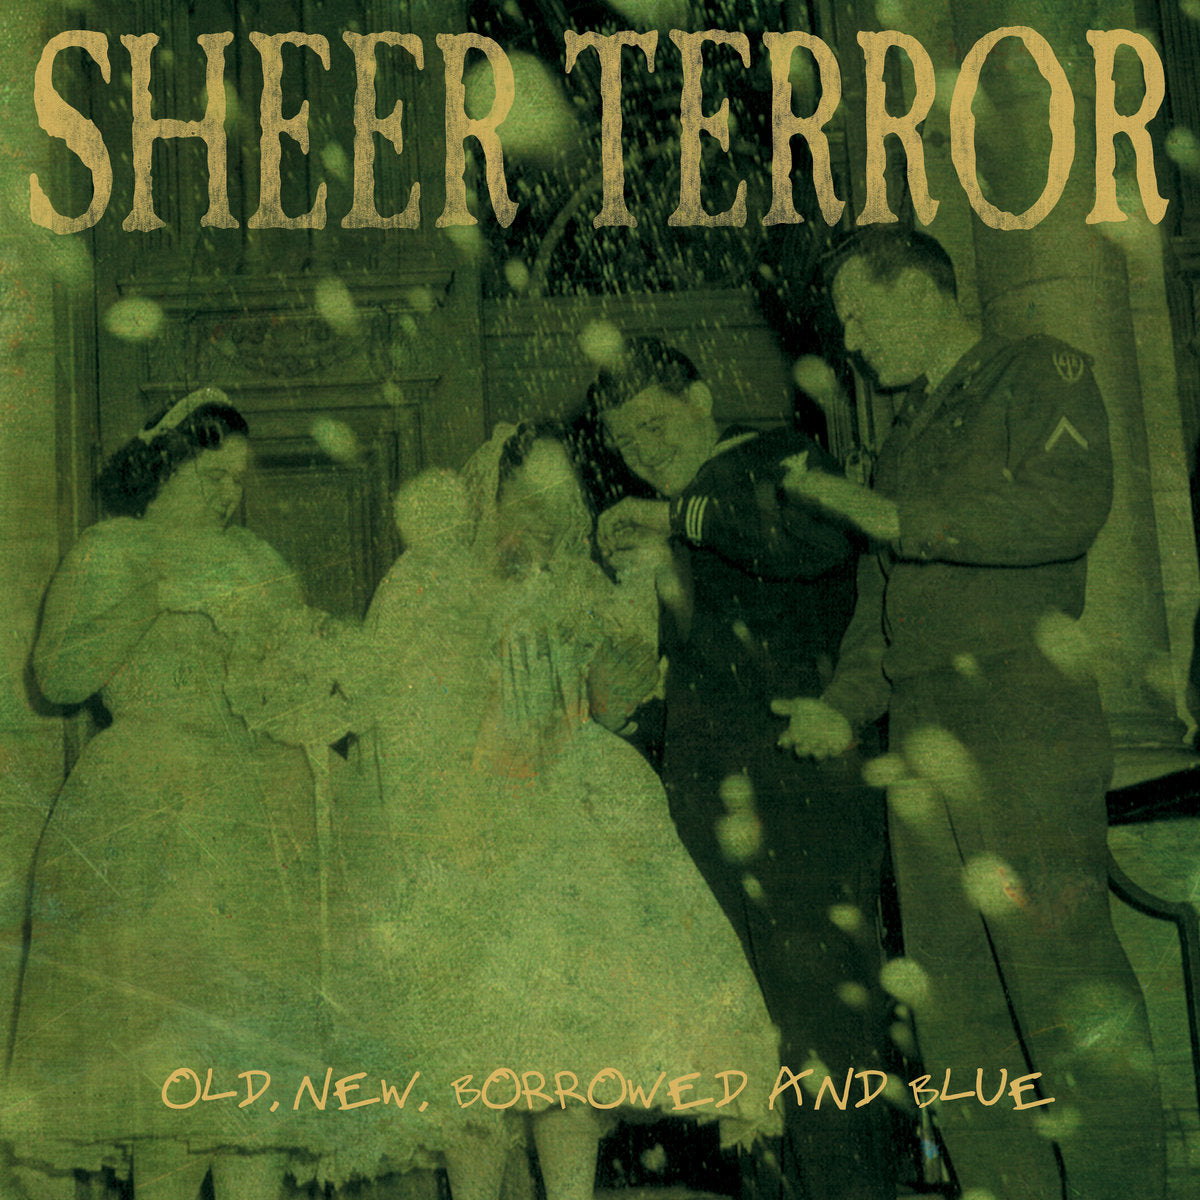 Sheer Terror "Old, New, Borrowed and Blue" 12" Vinyl